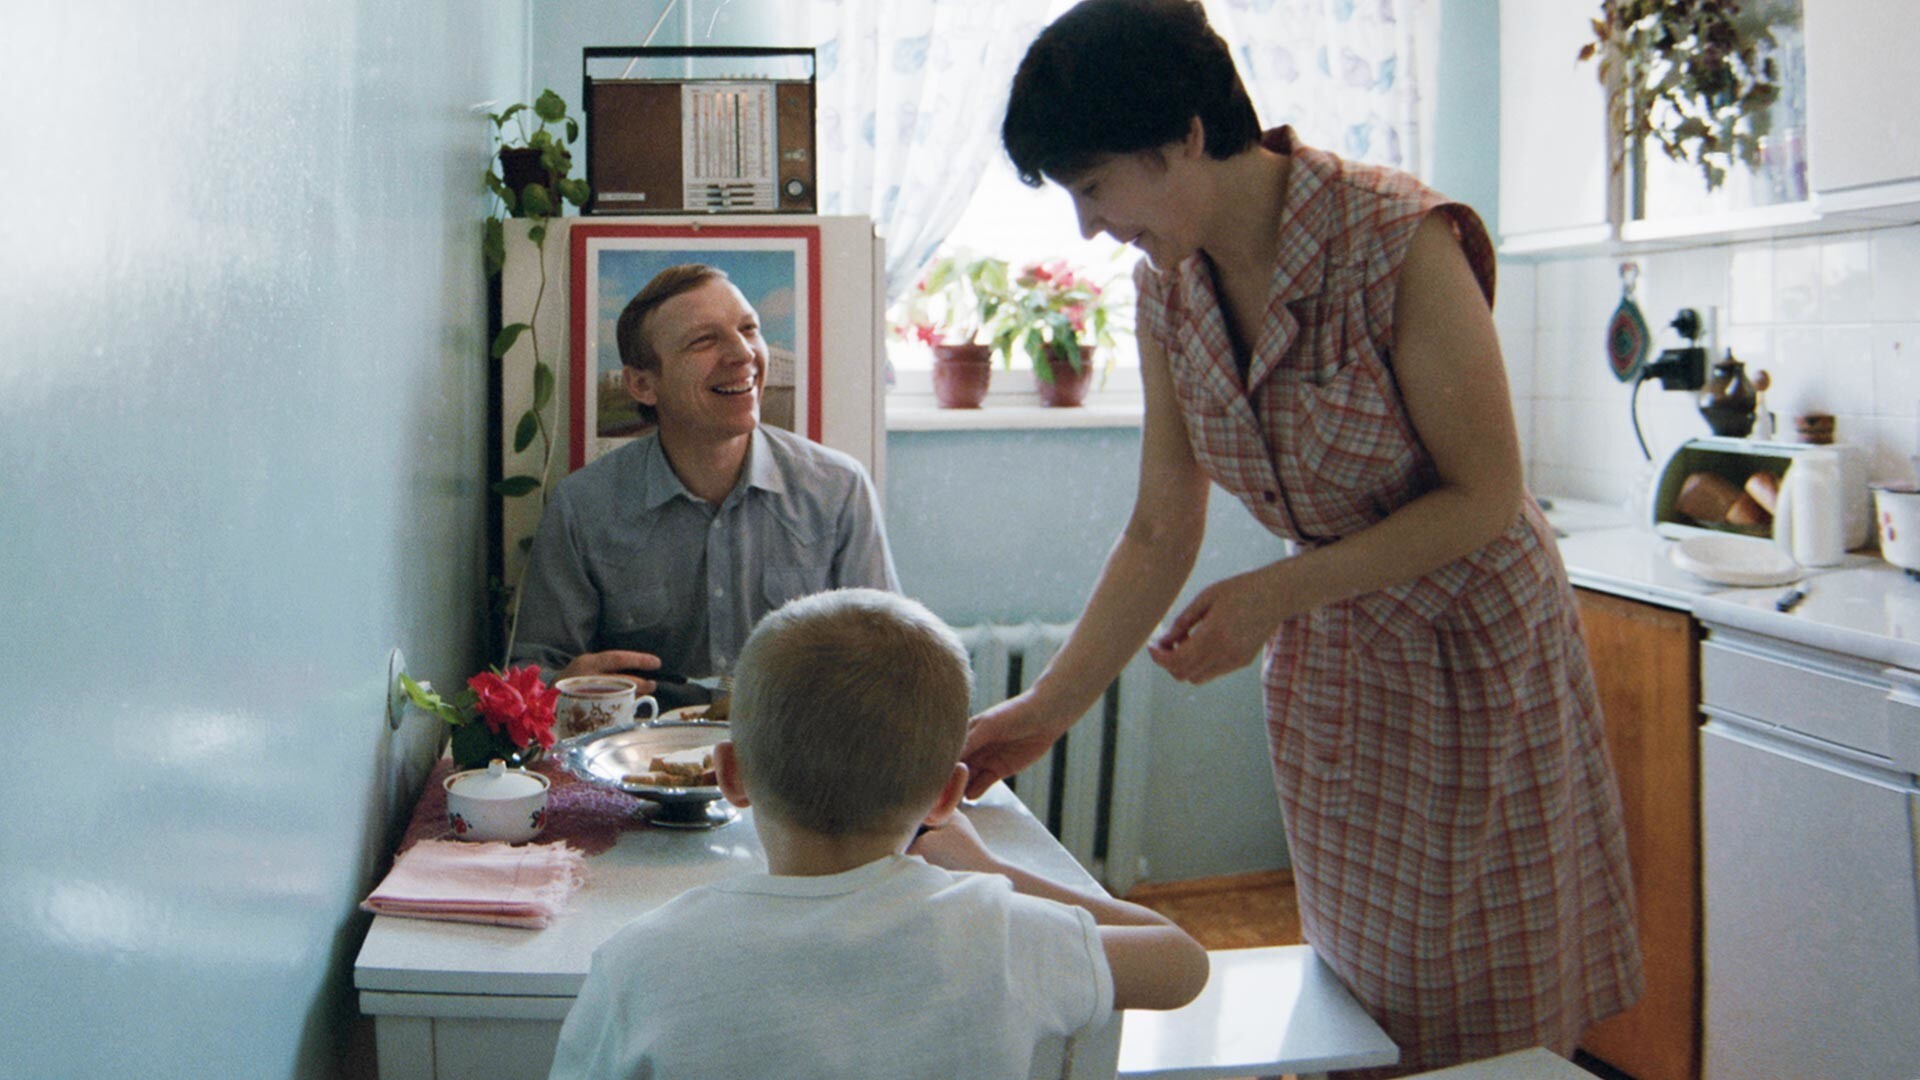 Nikolay Balashov, seorang pekerja pabrik AutoVAZ, sedang menyantap sarapan di dapur bersama keluarganya.